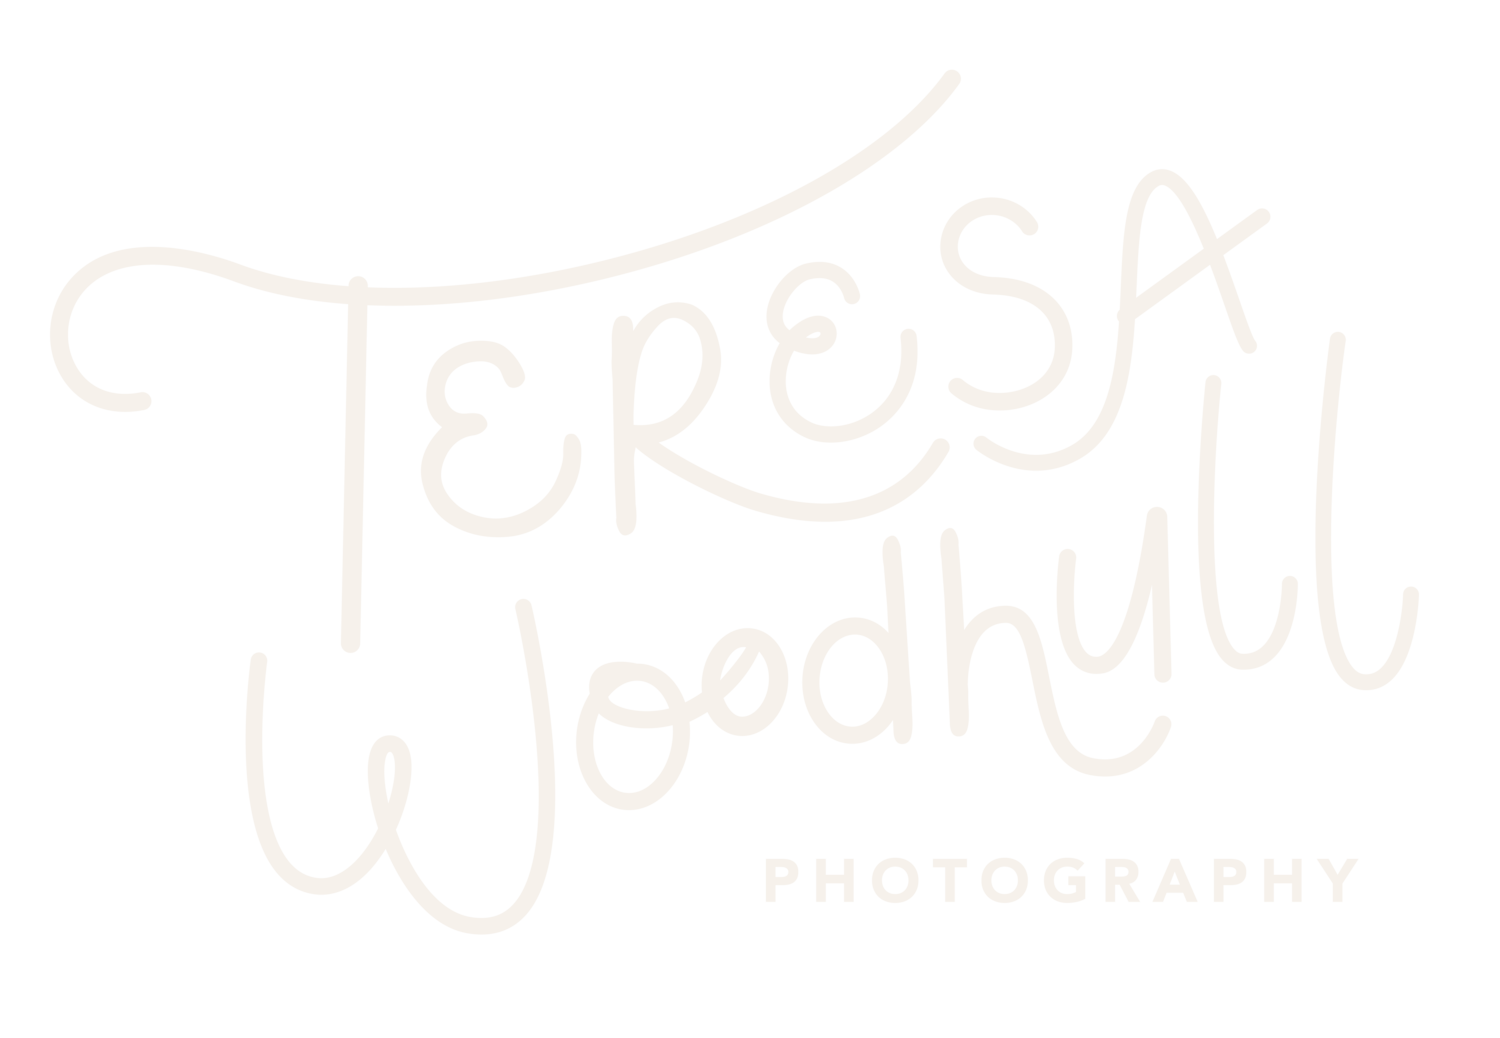 Teresa Woodhull Photography